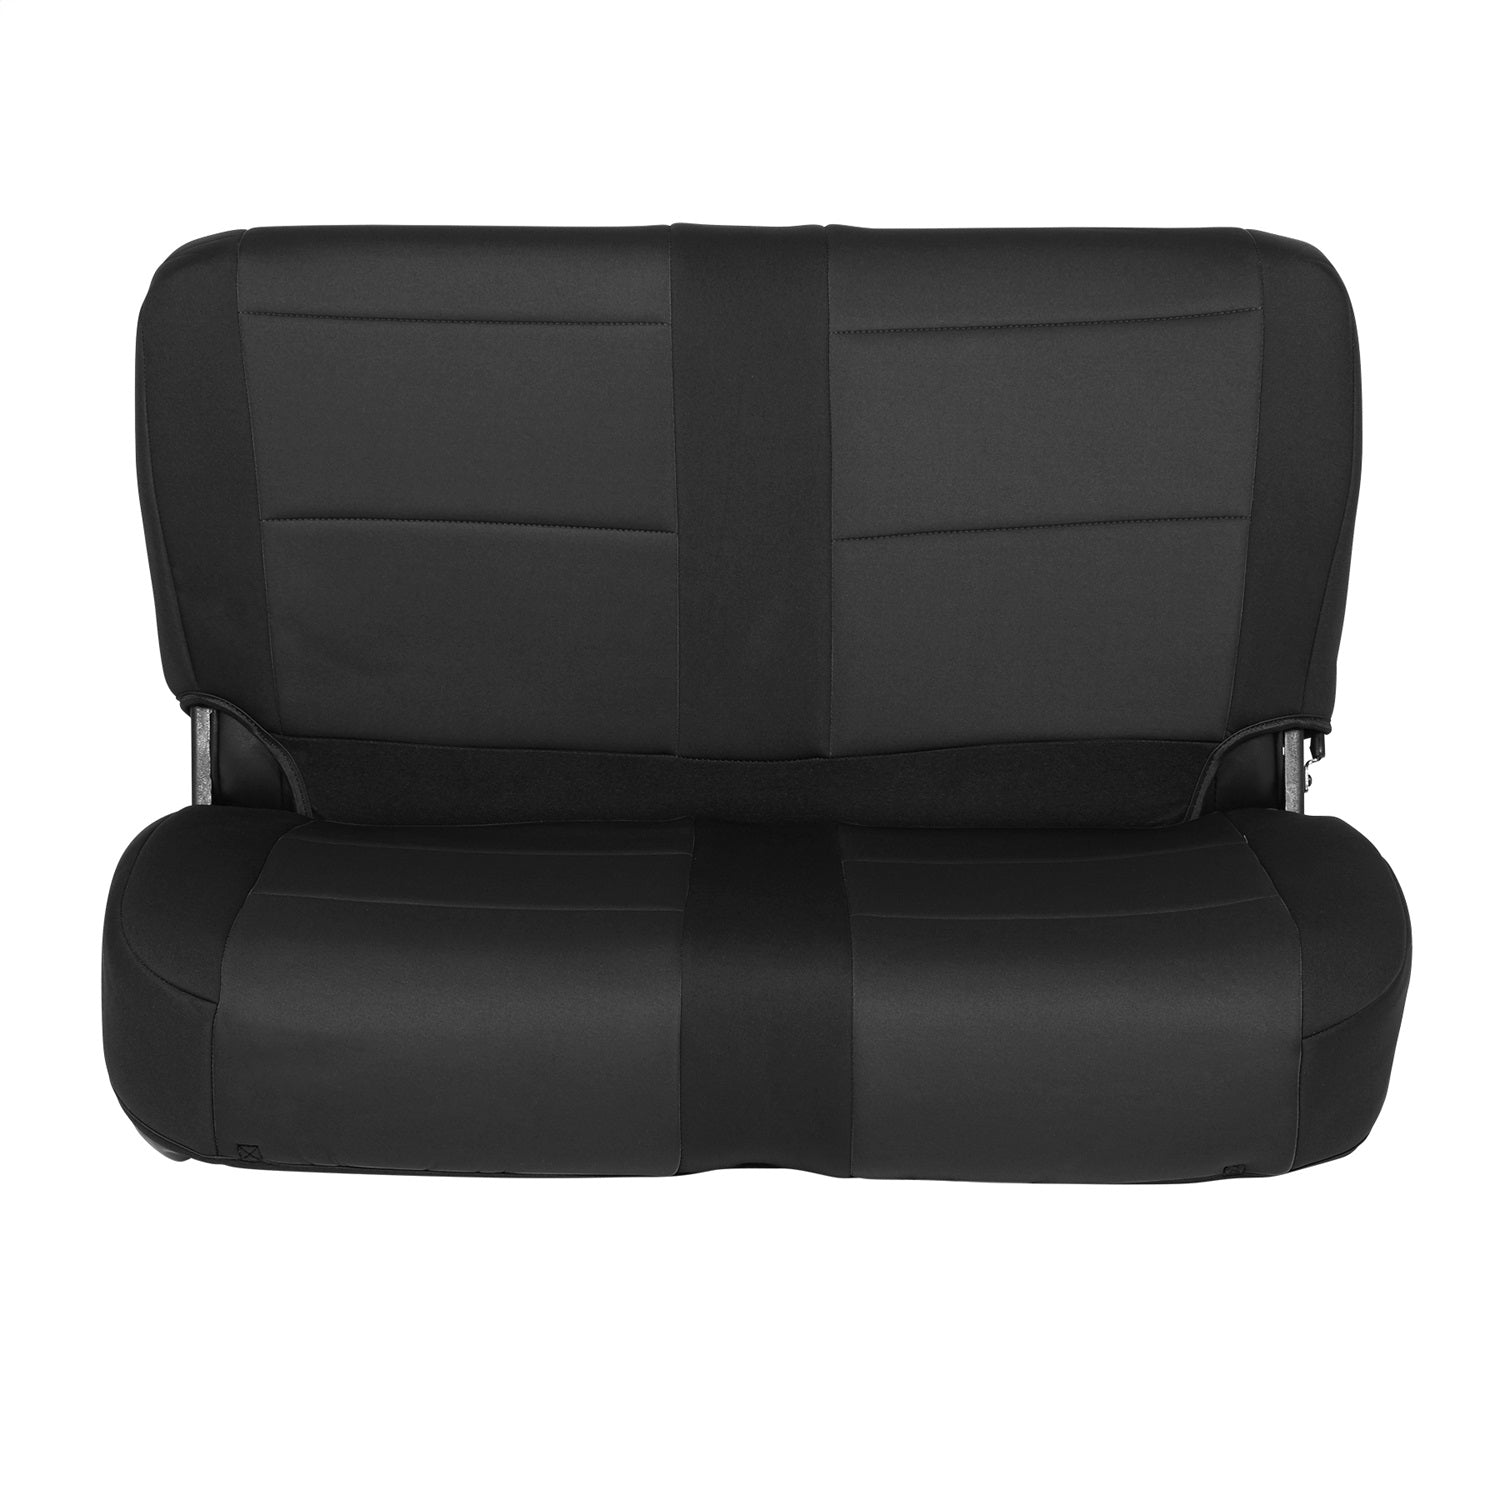 Smittybilt 471001 Neoprene Seat Cover Fits 76-90 CJ5 CJ7 Scrambler Wrangler (YJ)